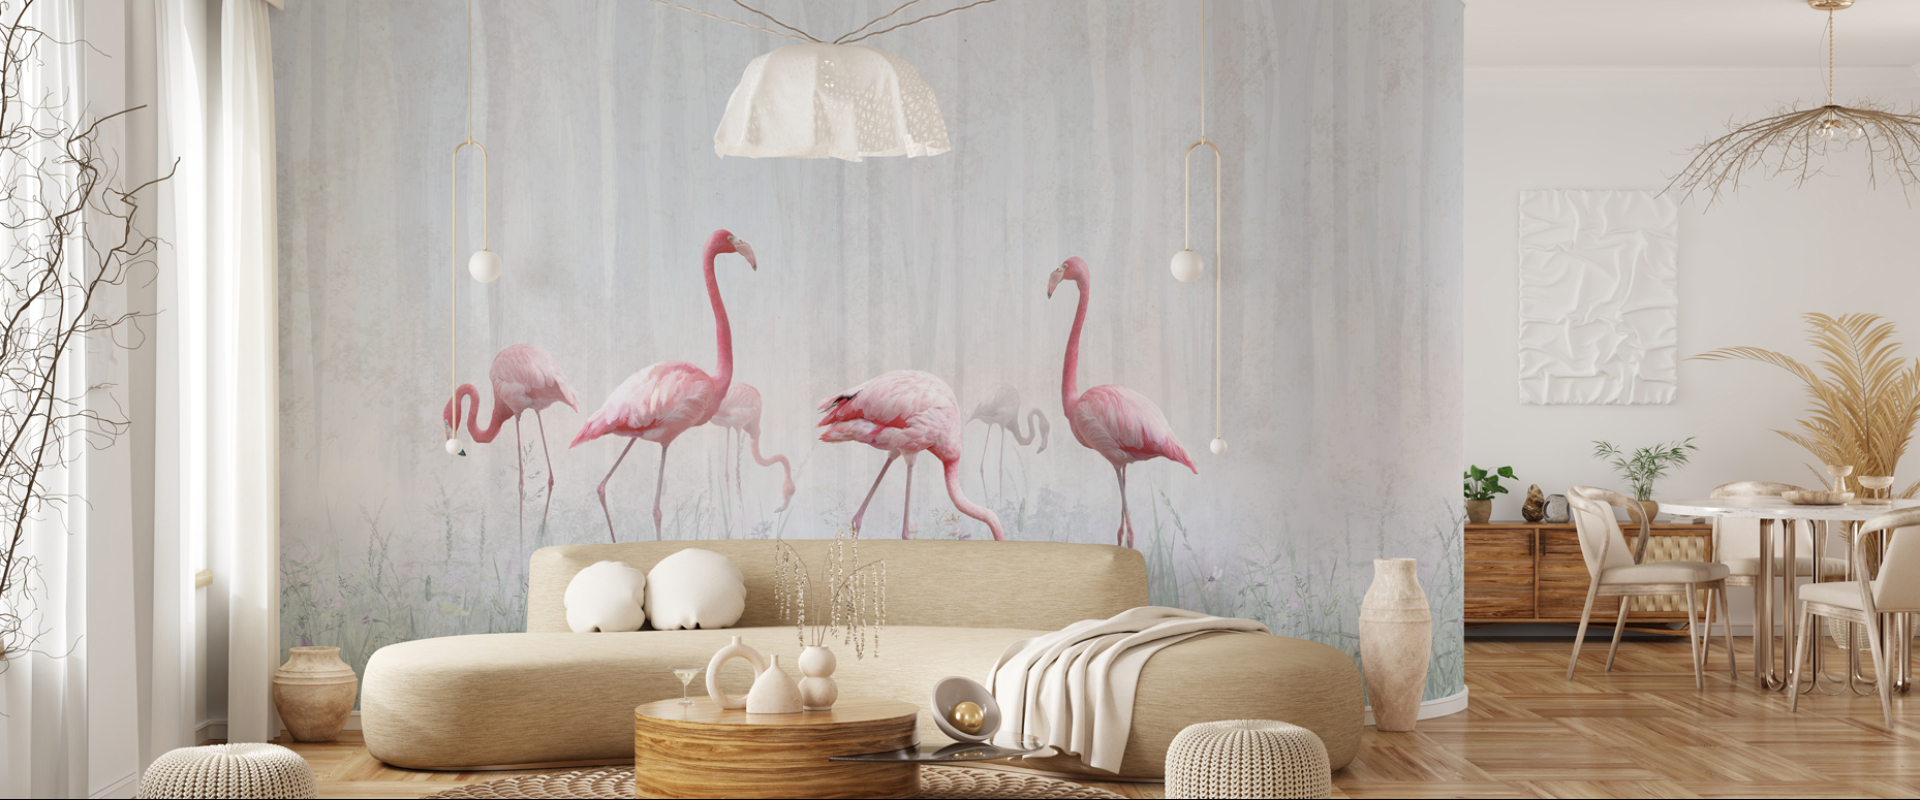 Фотошпалери Caribbean flamingo - Фото 1